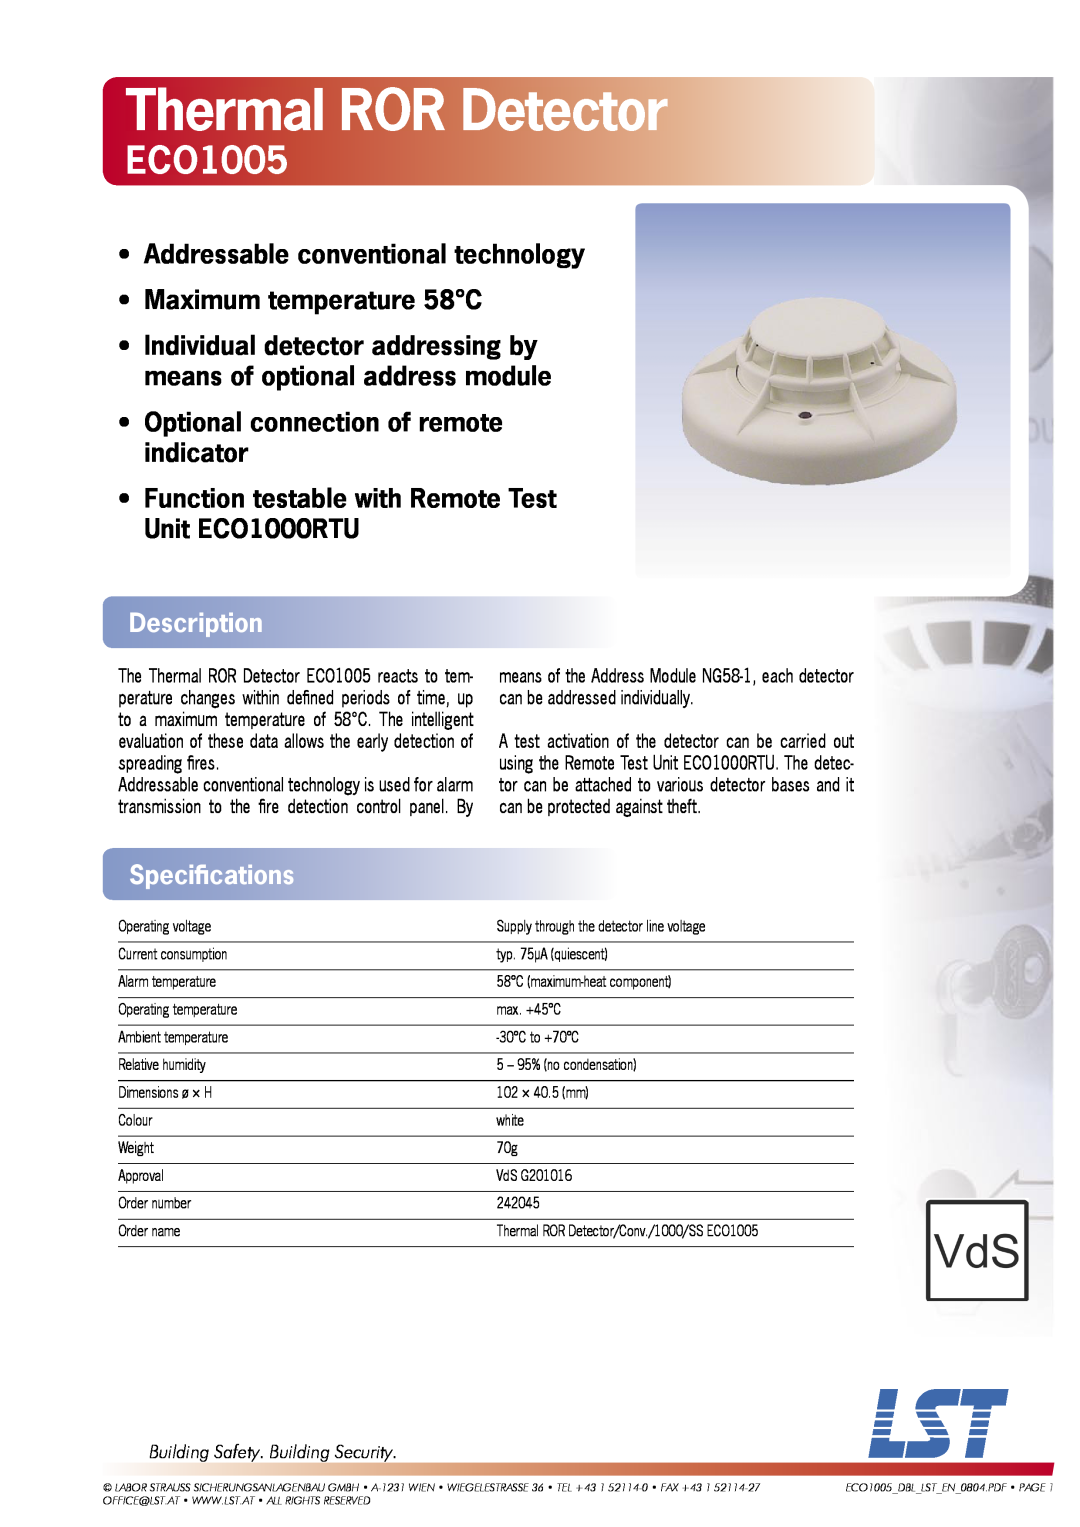 LST ECO1005 specifications Thermal ROR Detector, Addressable conventional technology, Maximum temperature 58C, Description 